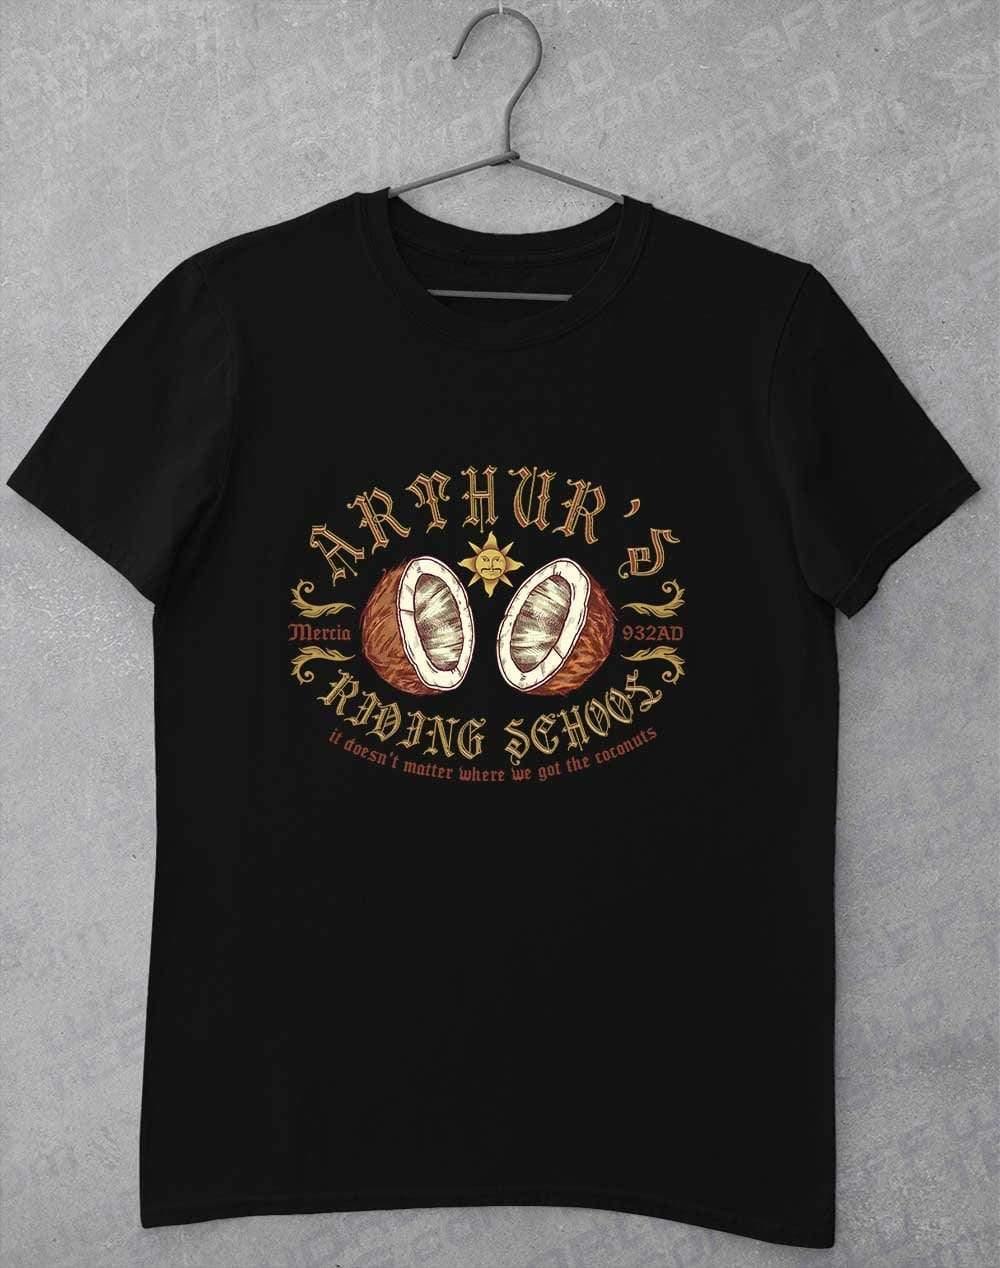 King Arthur's Riding School T-Shirt S / Black  - Off World Tees